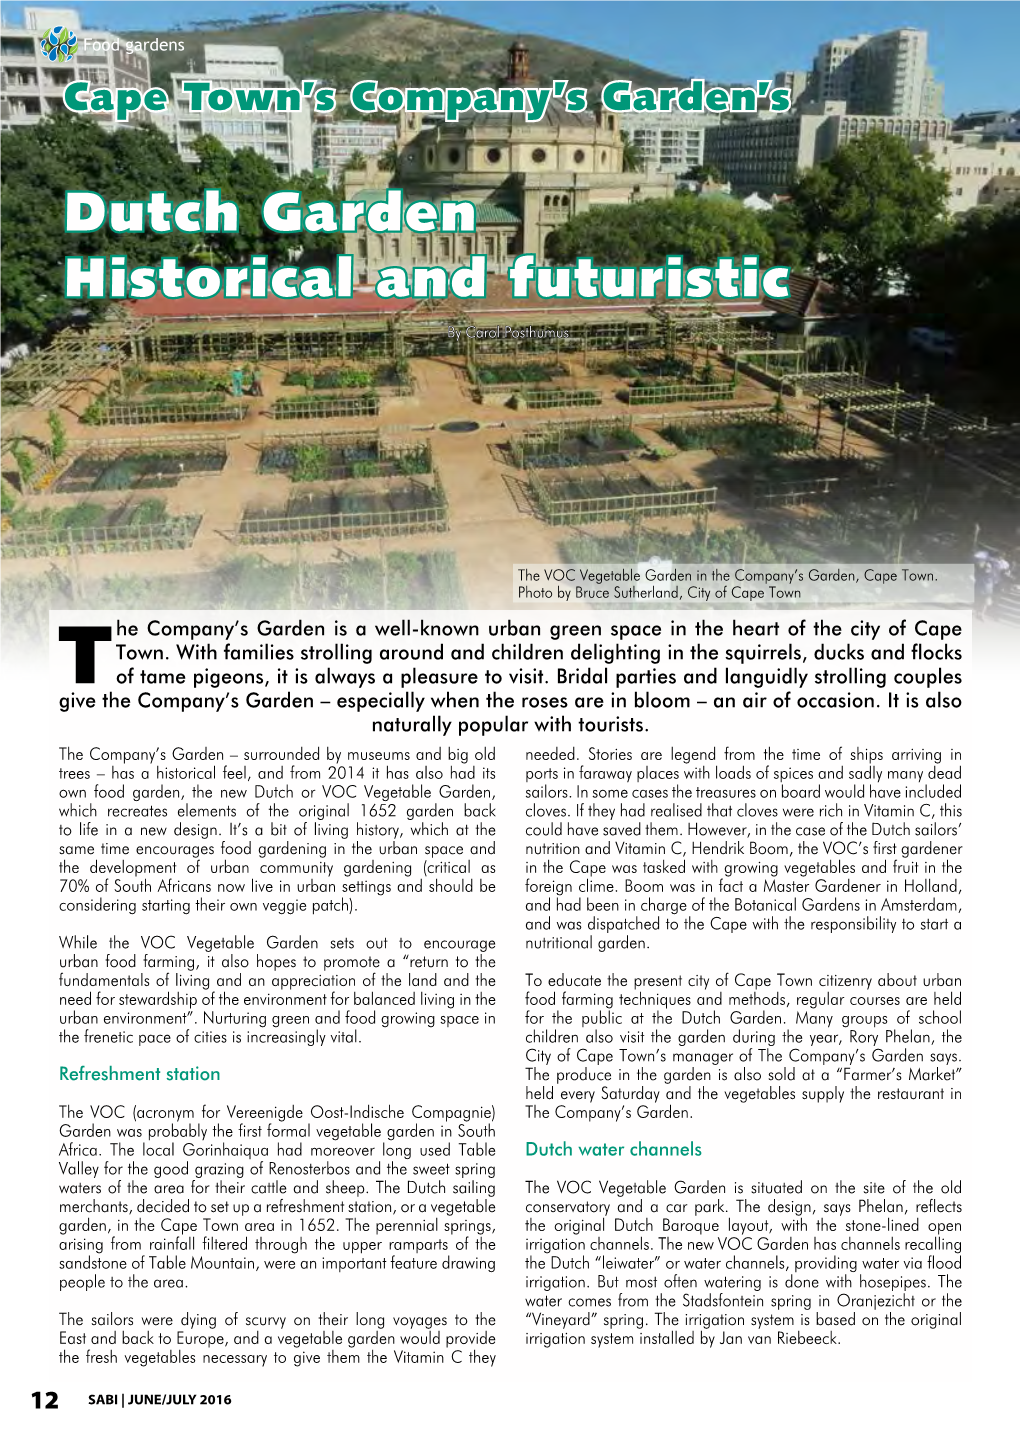 Dutch Garden Historical and Futuristic by Carol Posthumus